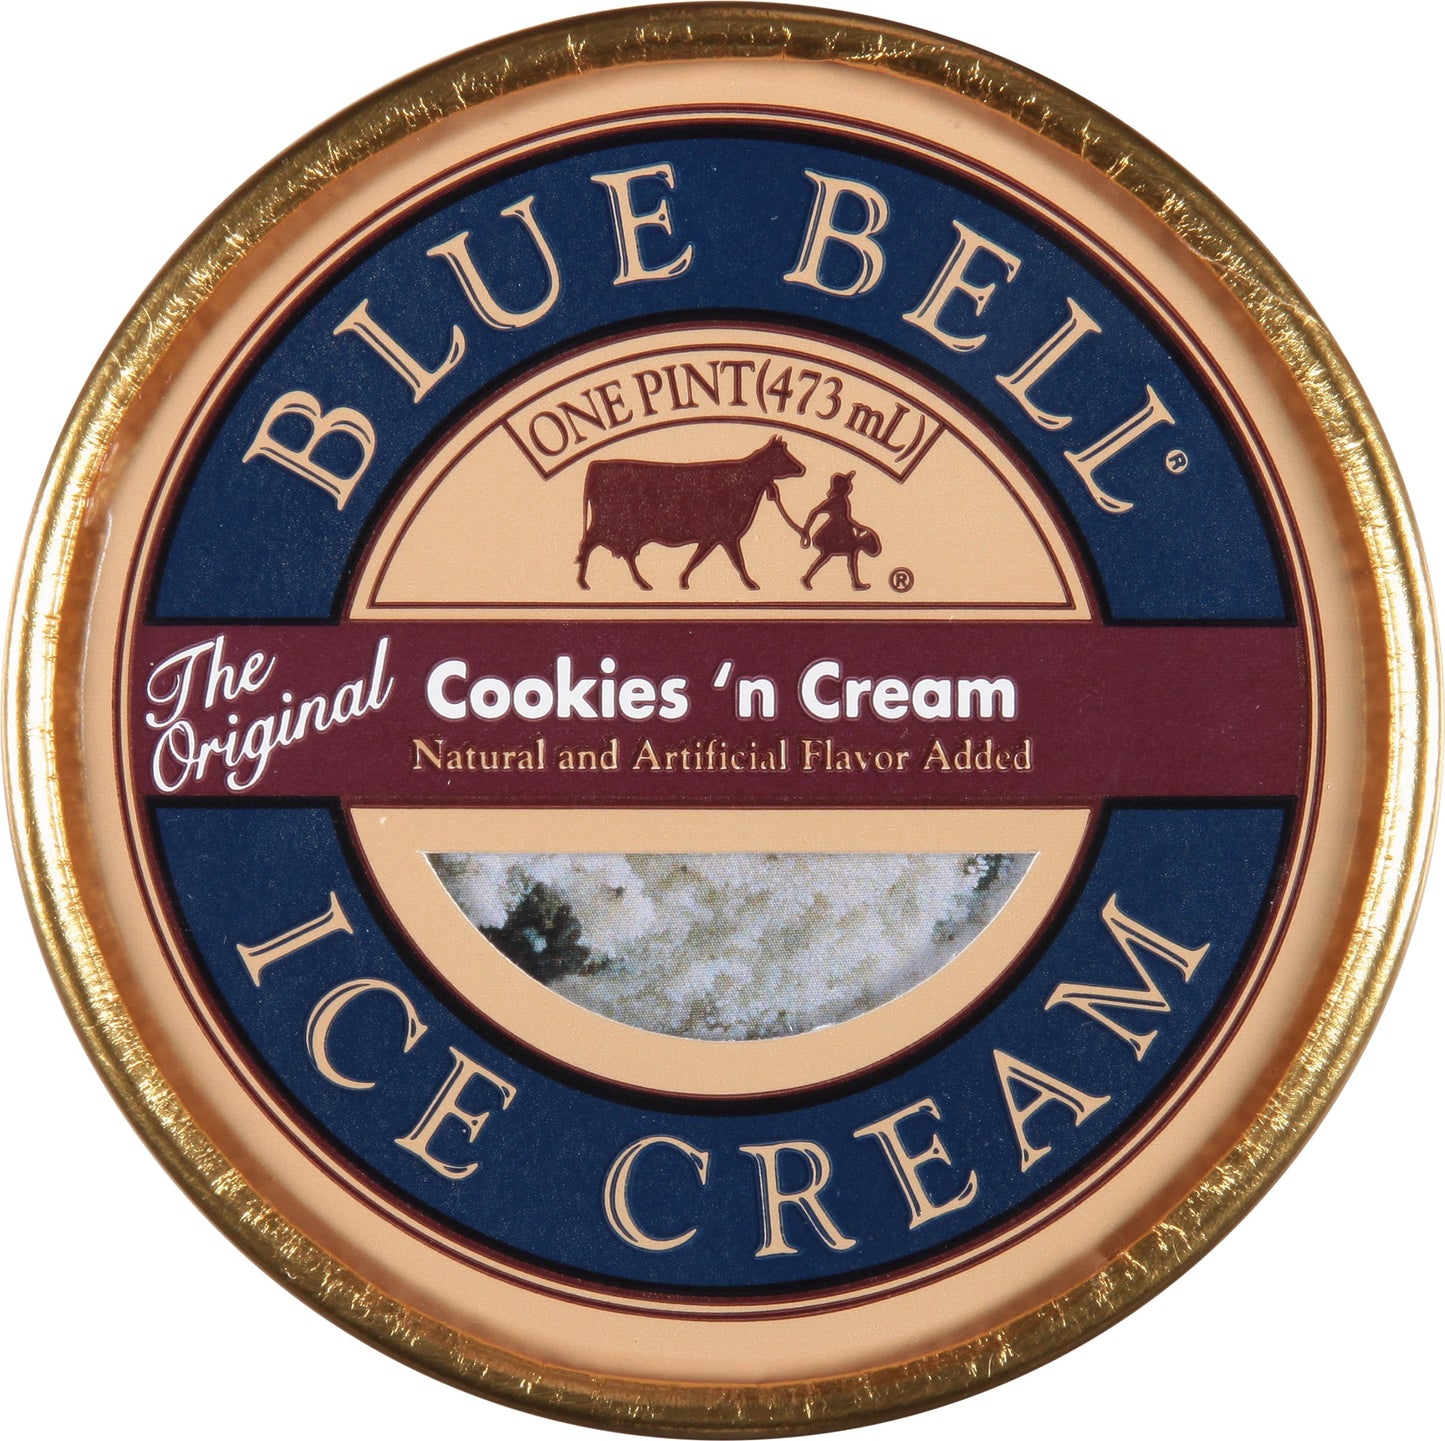 Blue Bell Gold Rim Cookies 'n Cream Ice Cream Pint, 16 fl oz